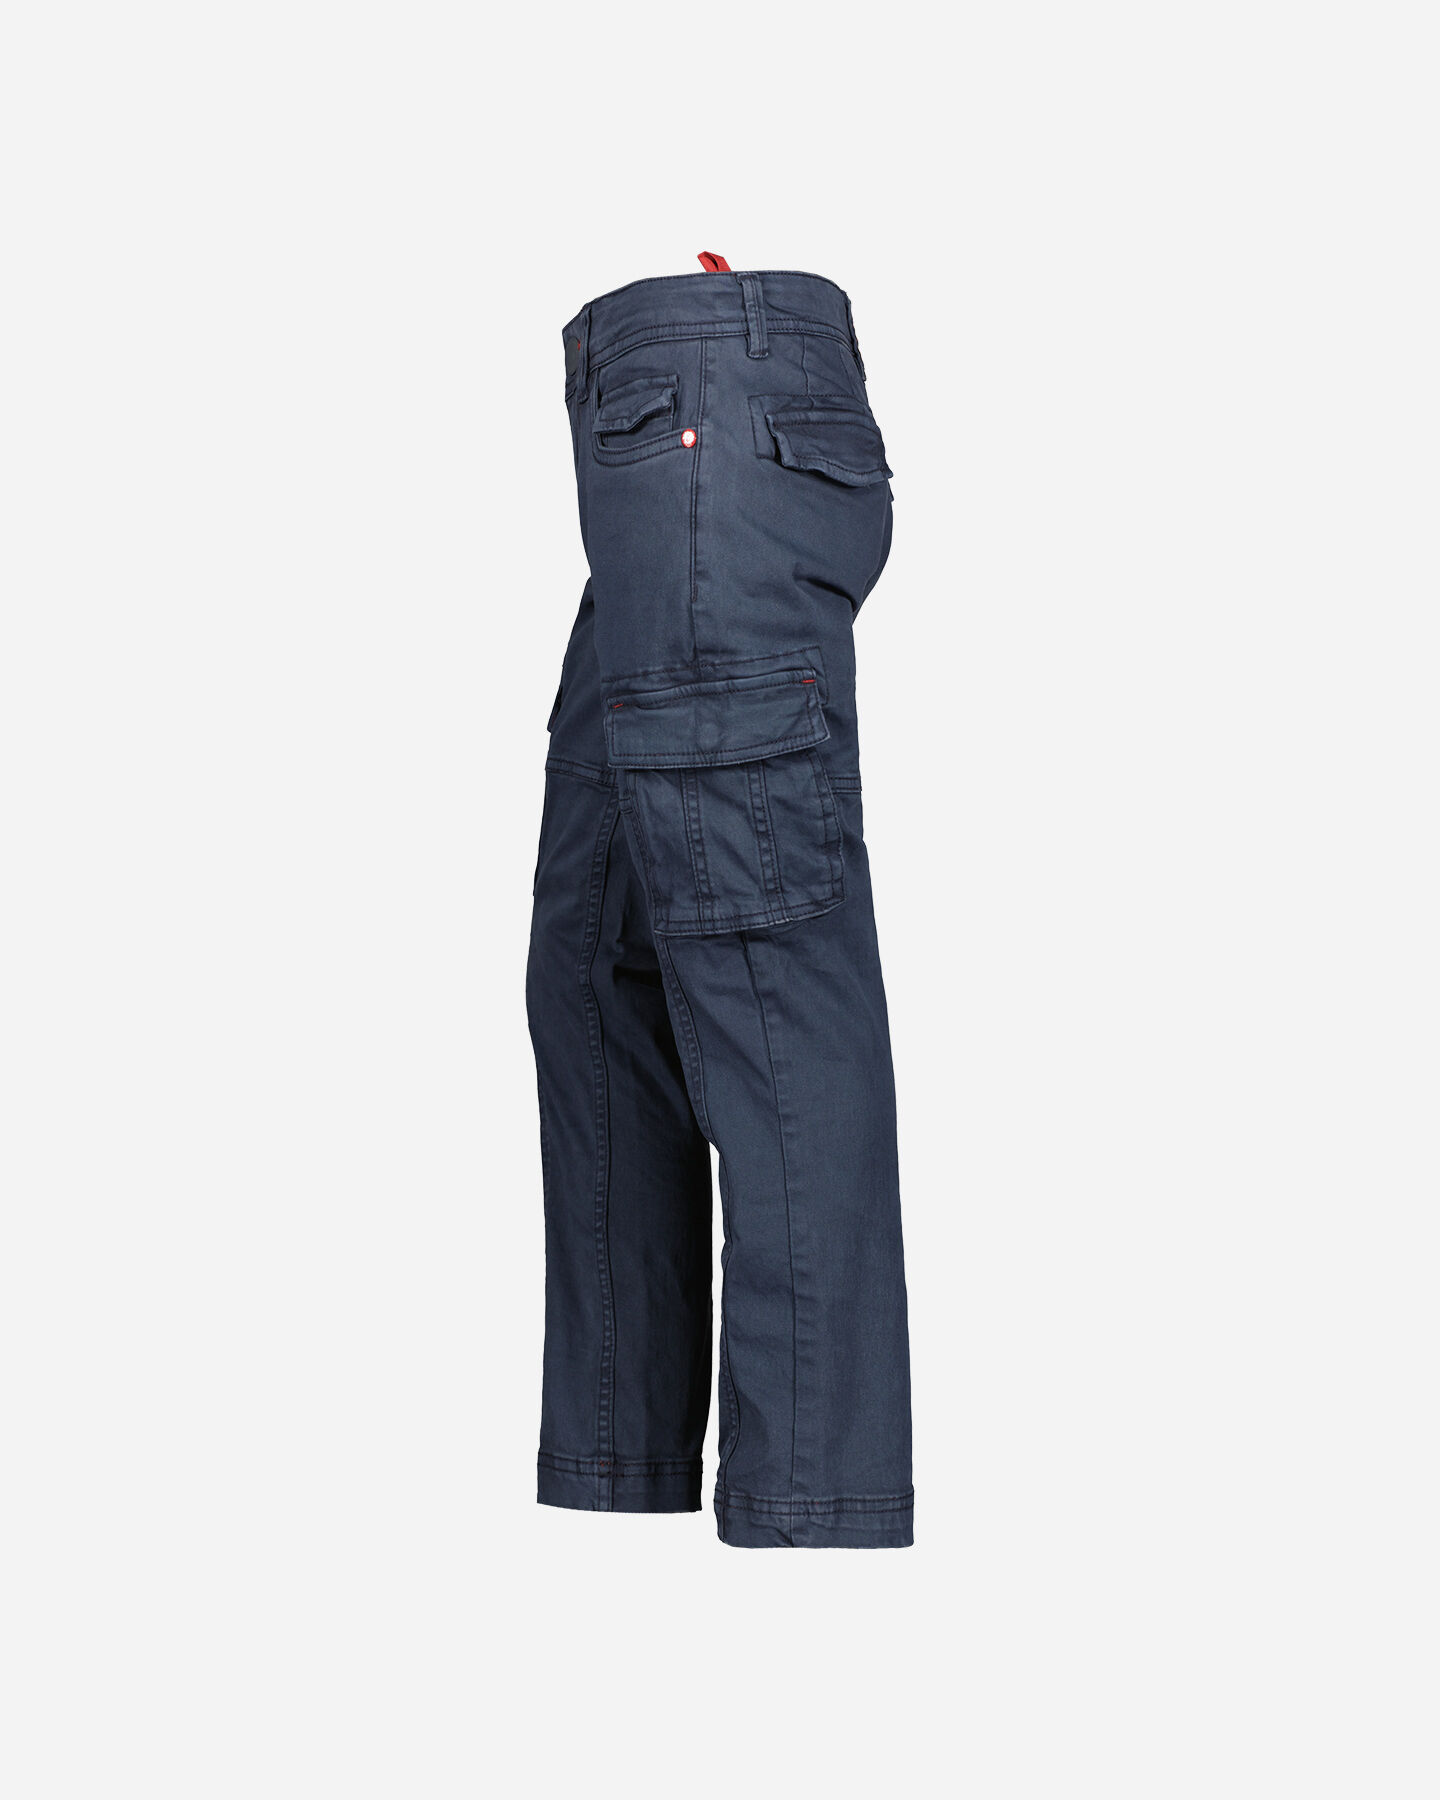  Pantalone MISTRAL CARGO JR S4107803|519|8A scatto 1